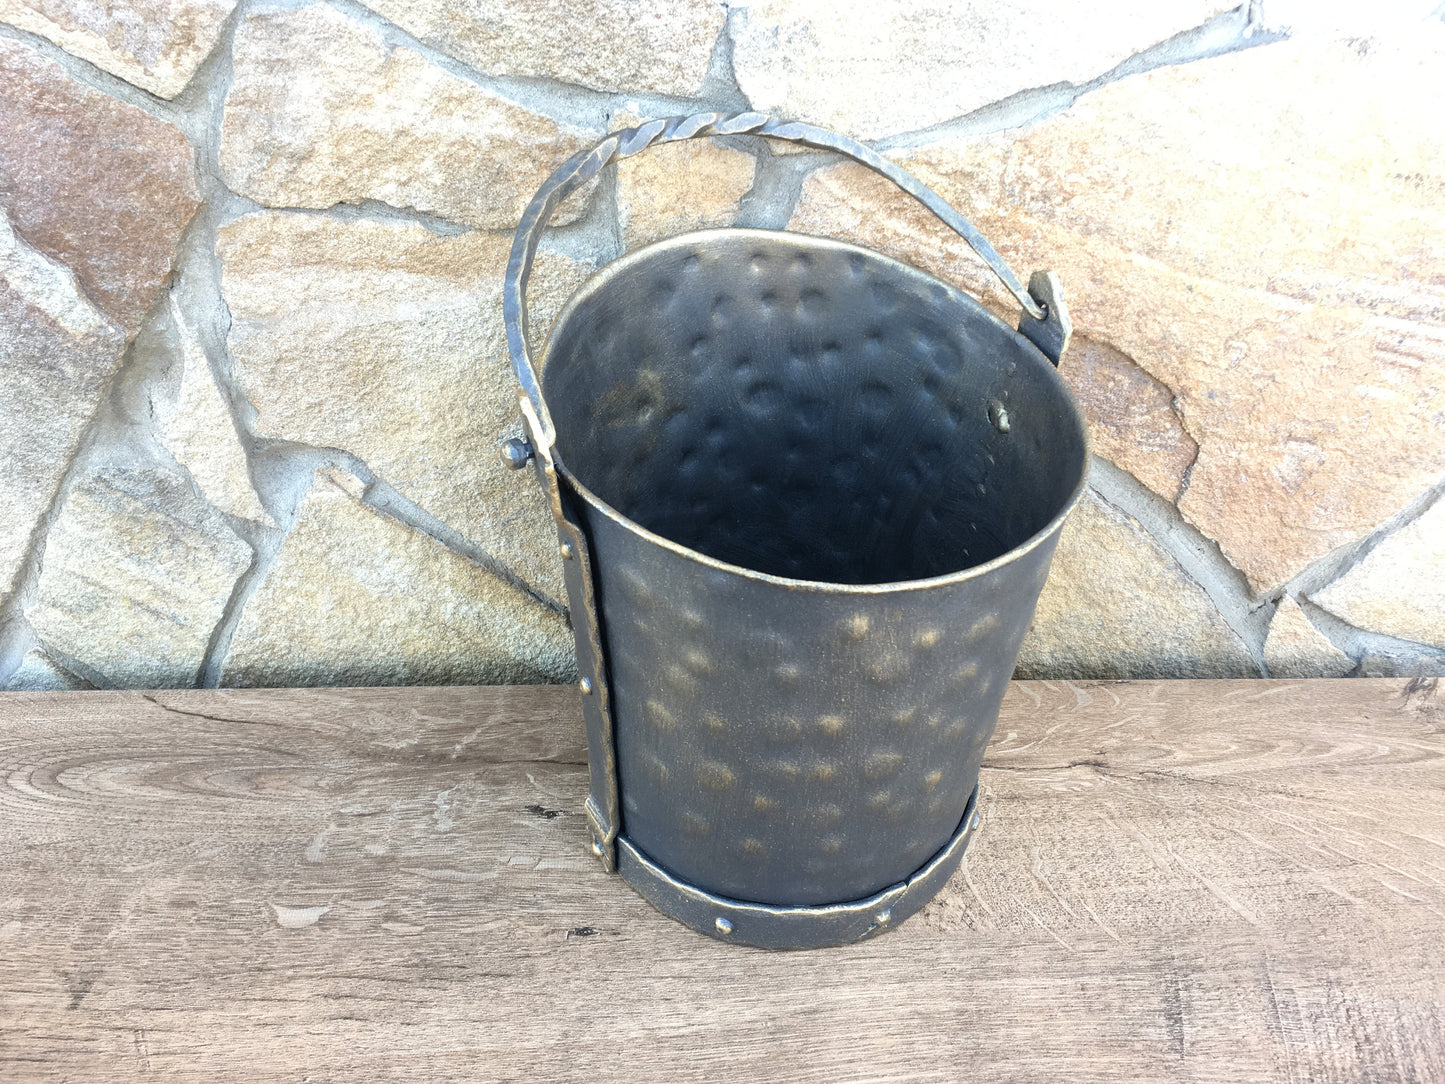 Personalized bucket, personalized gift, coal bucket, ash bucket, firewood holder, coal pail, coal scuttle, firewood bucket, fireplace decor